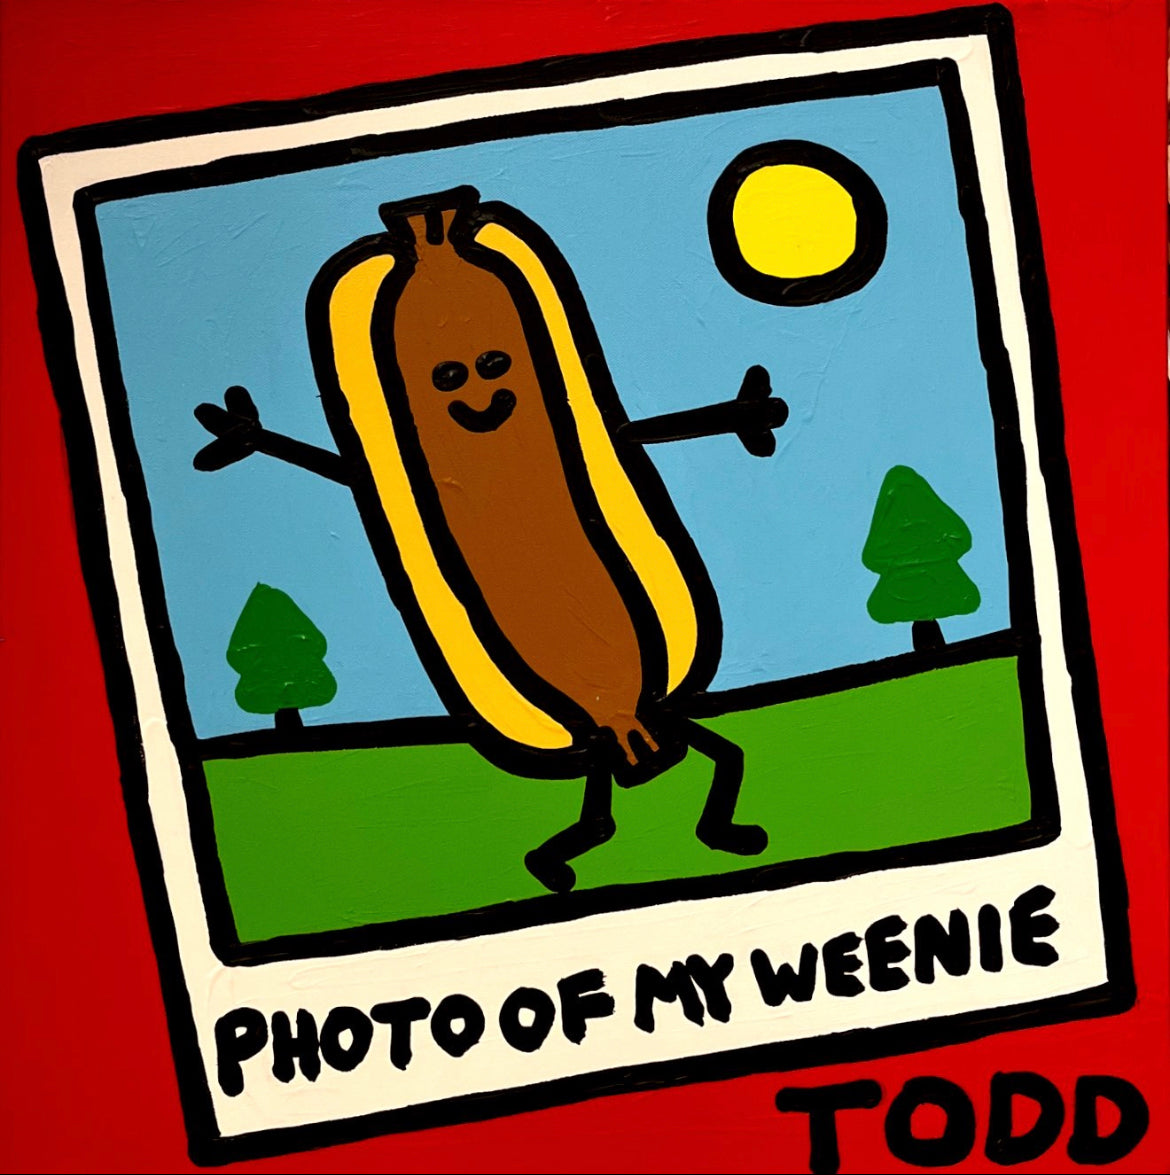 Photo of My Weenie - Original